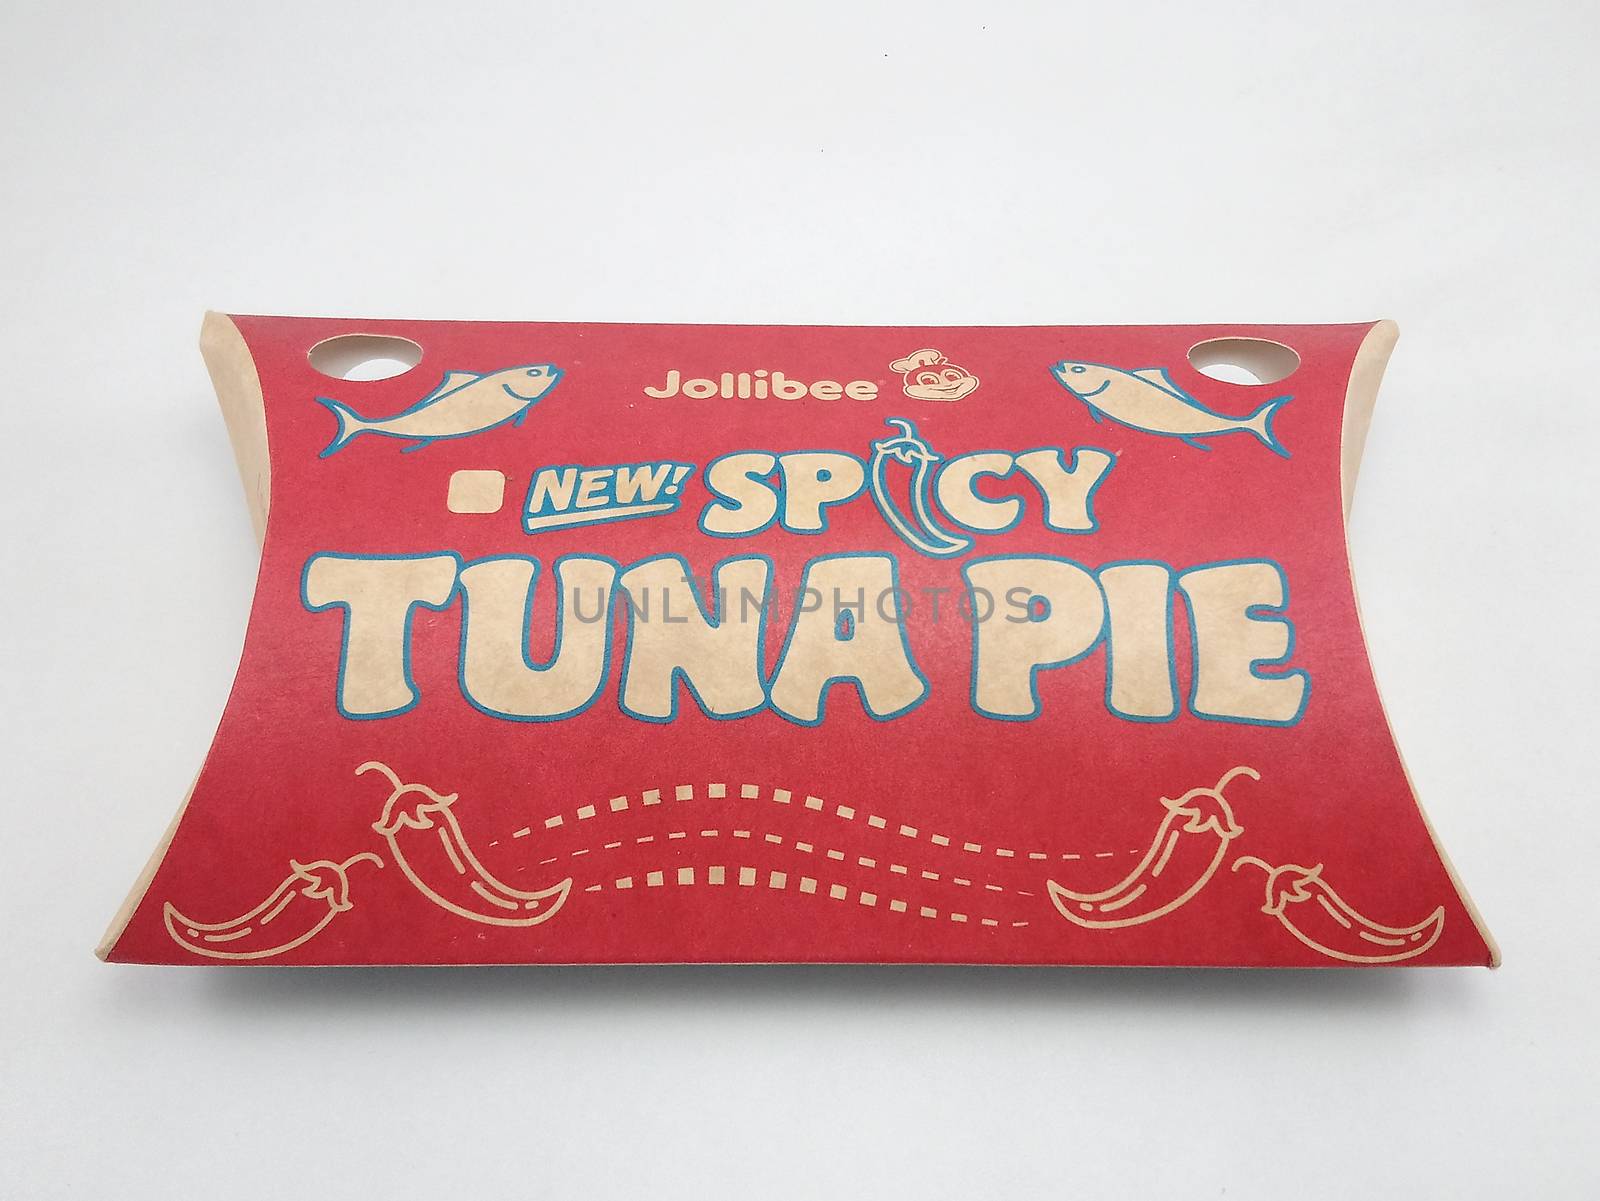 Jollibee spicy tuna pie in Manila, Philippines by imwaltersy